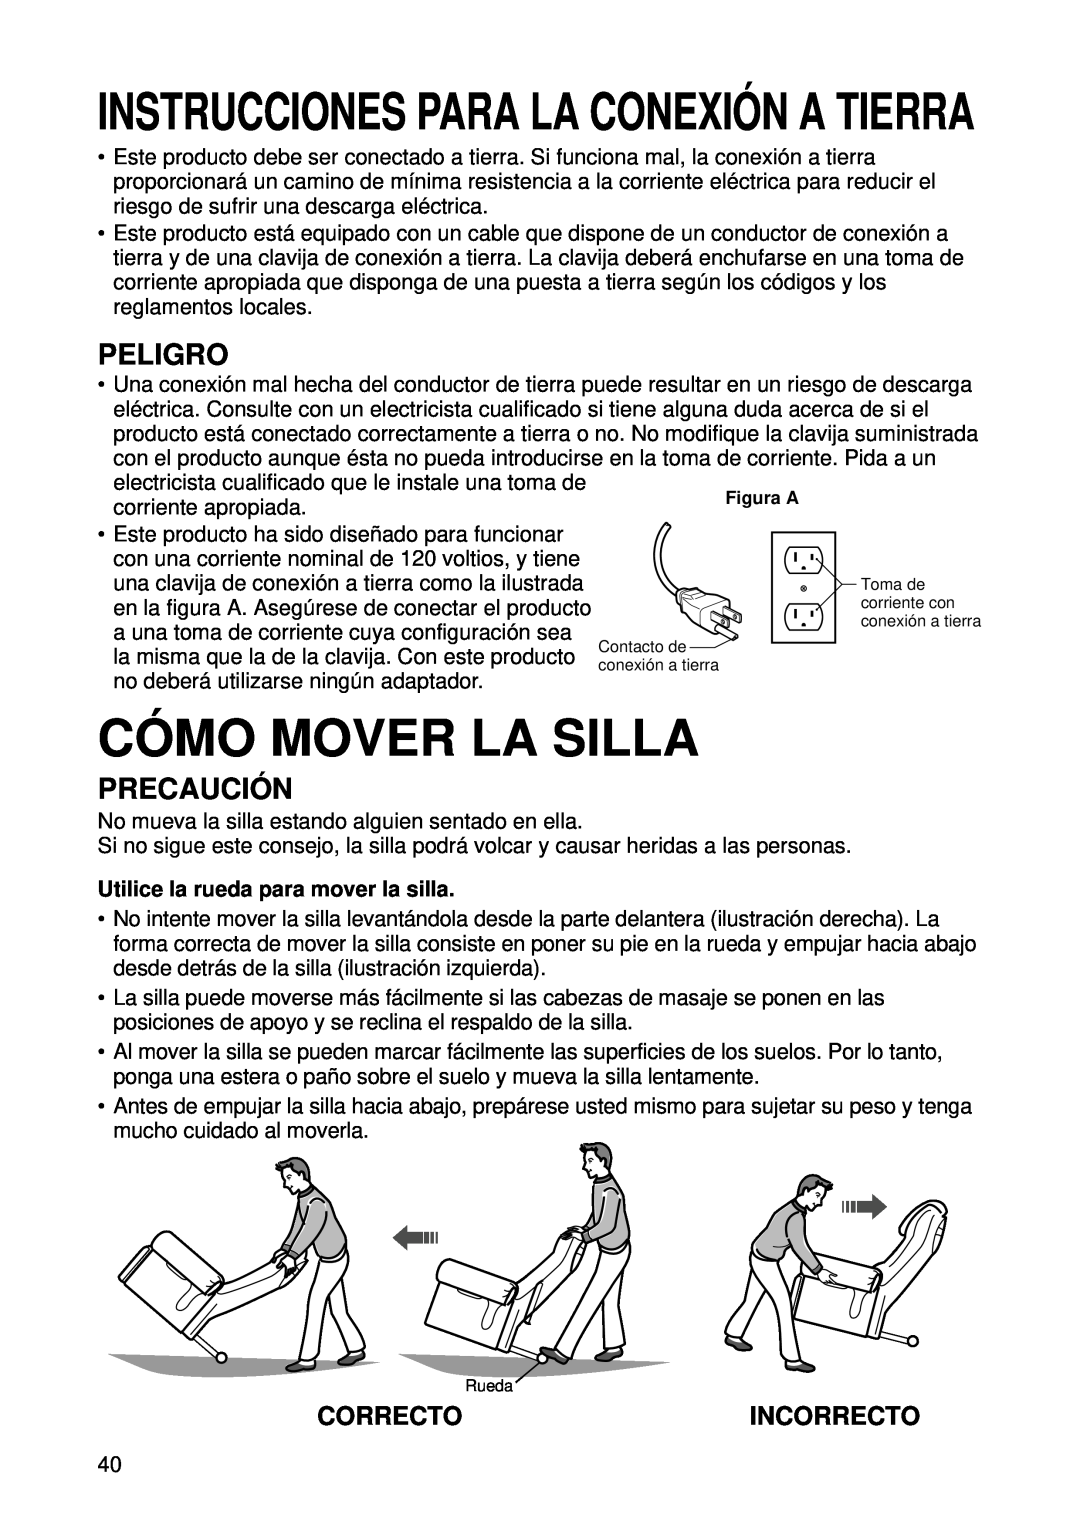 Panasonic EP1015 Có Mo Mover La Silla, Instrucciones Para La Conexió N A Tierra, Peligro, Precaució N, Correcto 